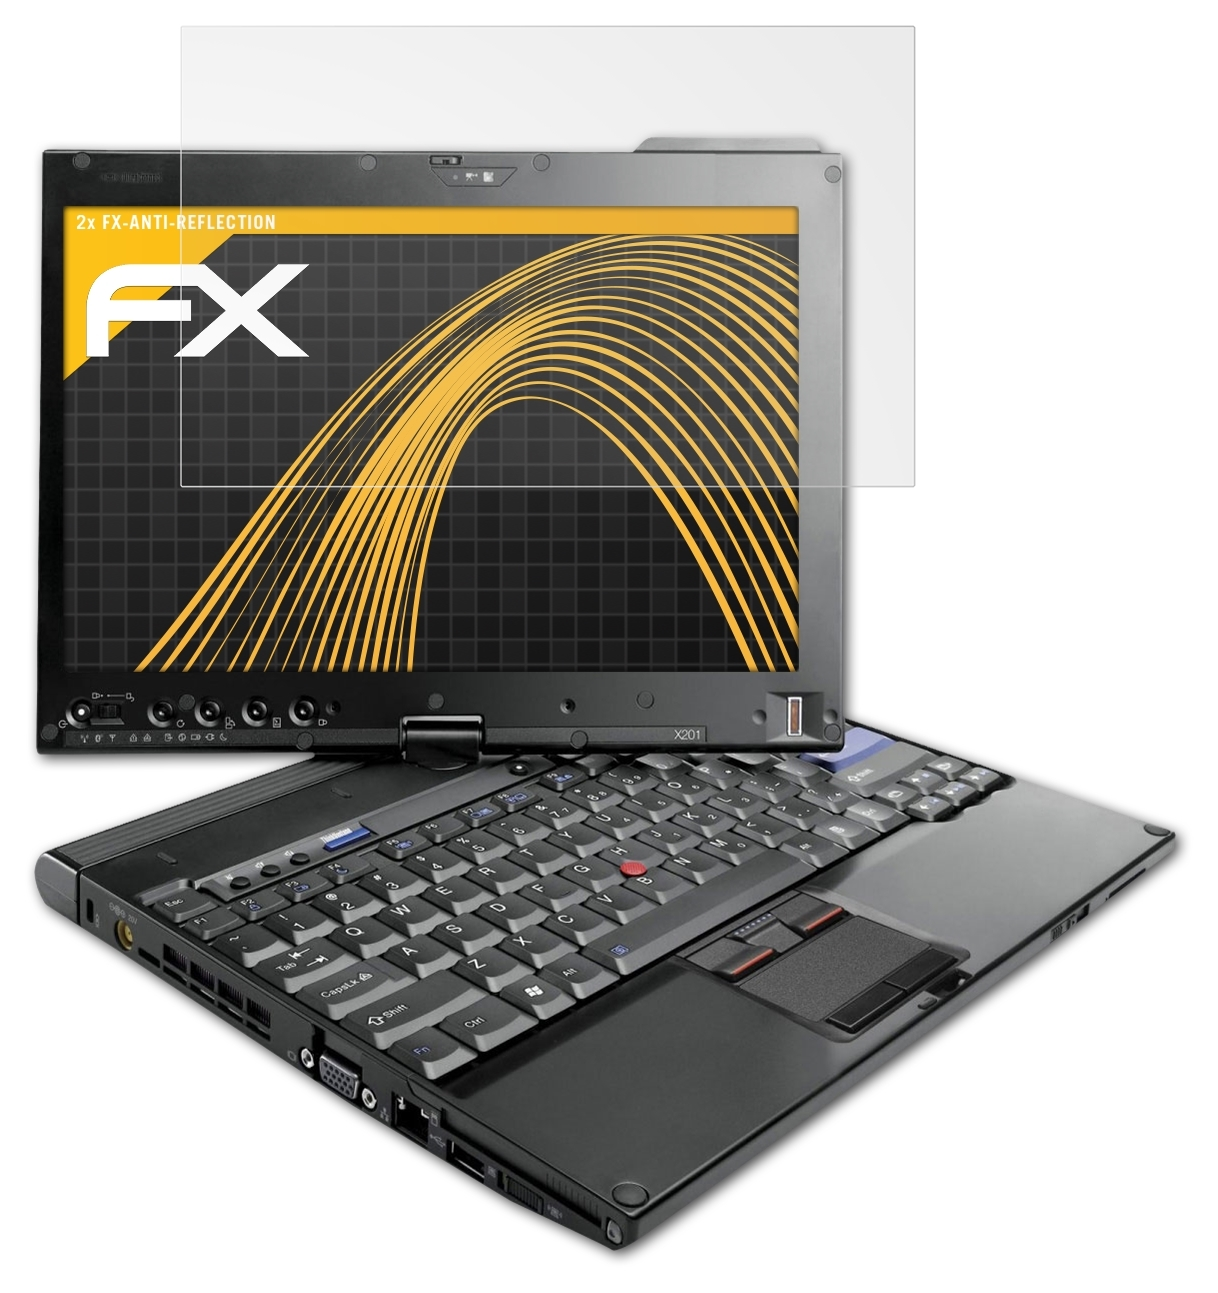 ATFOLIX FX-Antireflex 2x Tablet) Displayschutz(für ThinkPad Lenovo X201